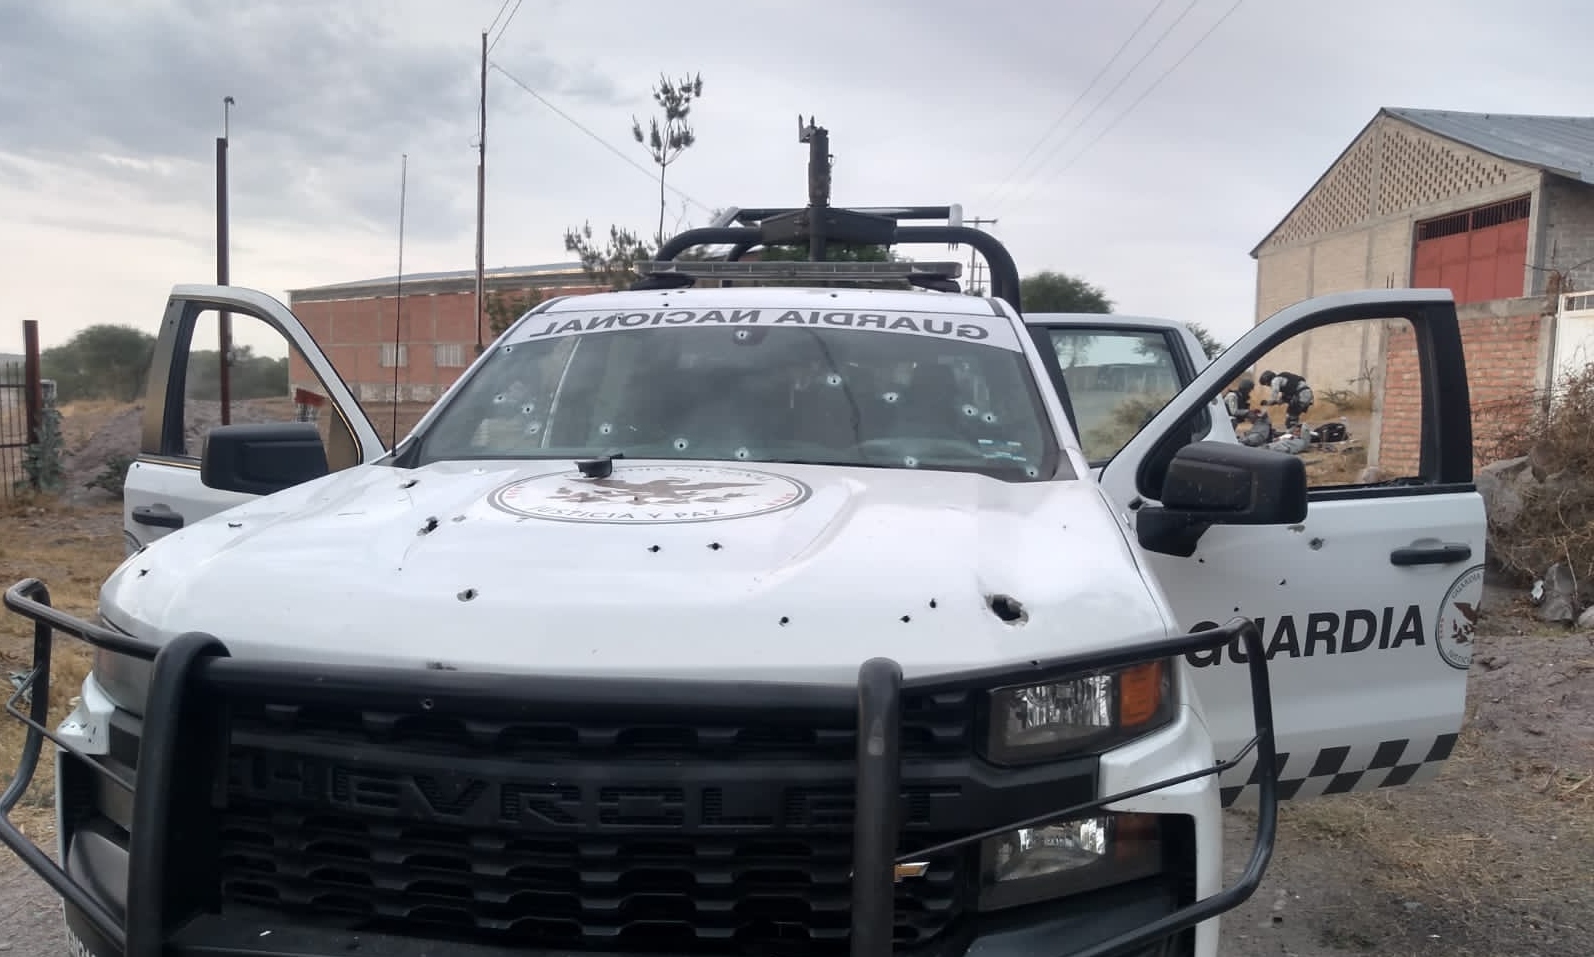 Incautan FX-05 y cargadores a grupo criminal en Teocaltiche Jalisco P6UXOYXORFE6NETZPSFNZYDAIE